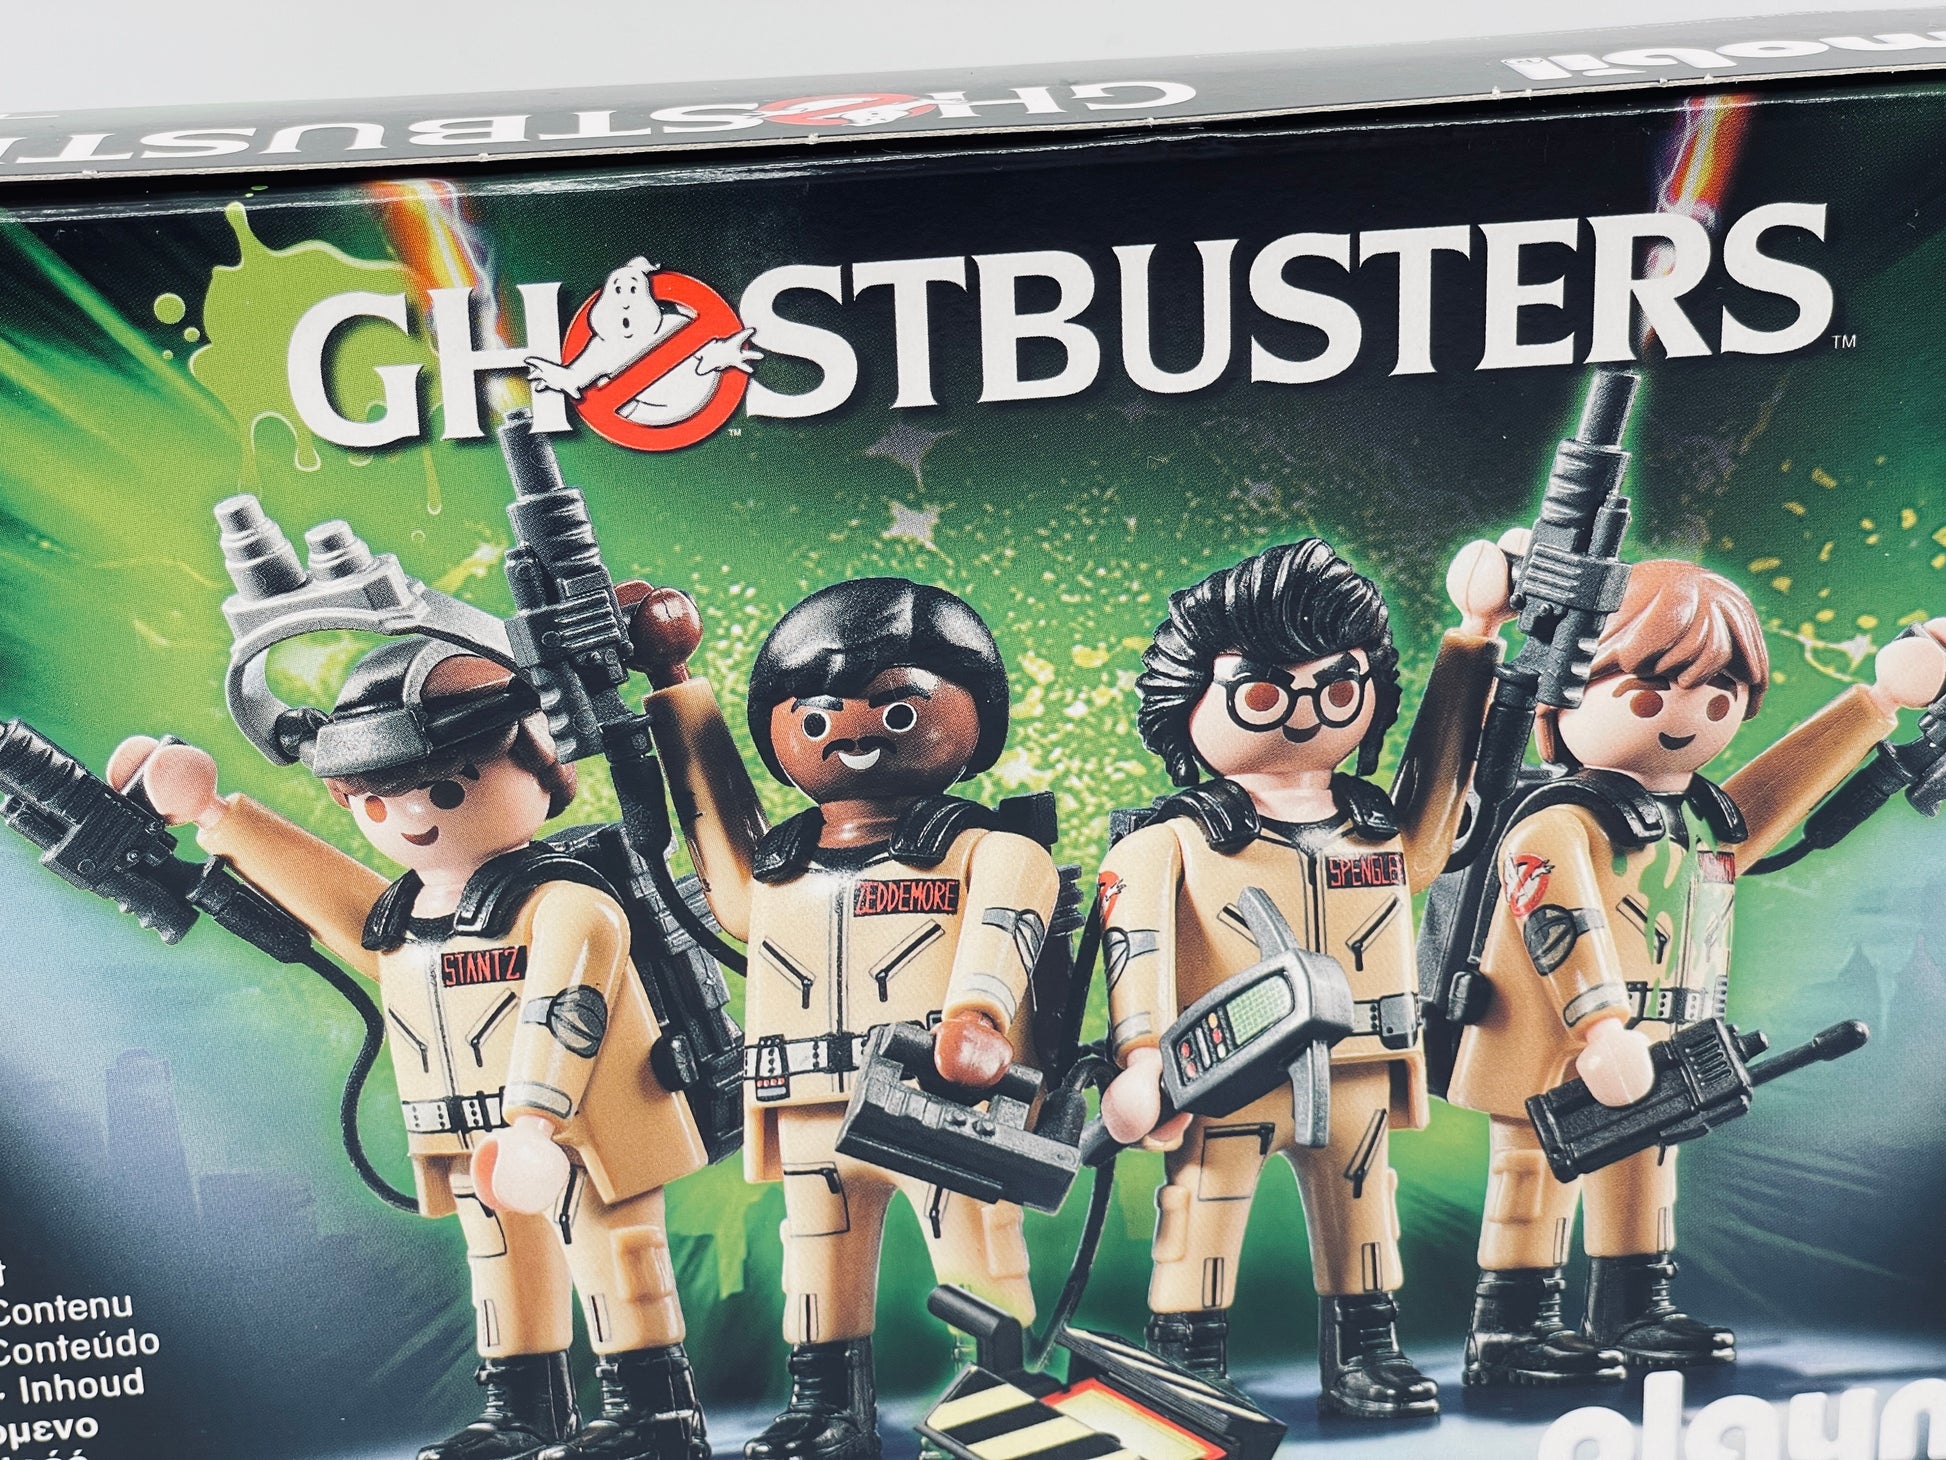 Playmobil Ghostbusters 70175 Zeddemore, Venkman, Spengler, Stantz Figu –  End of Toys Store